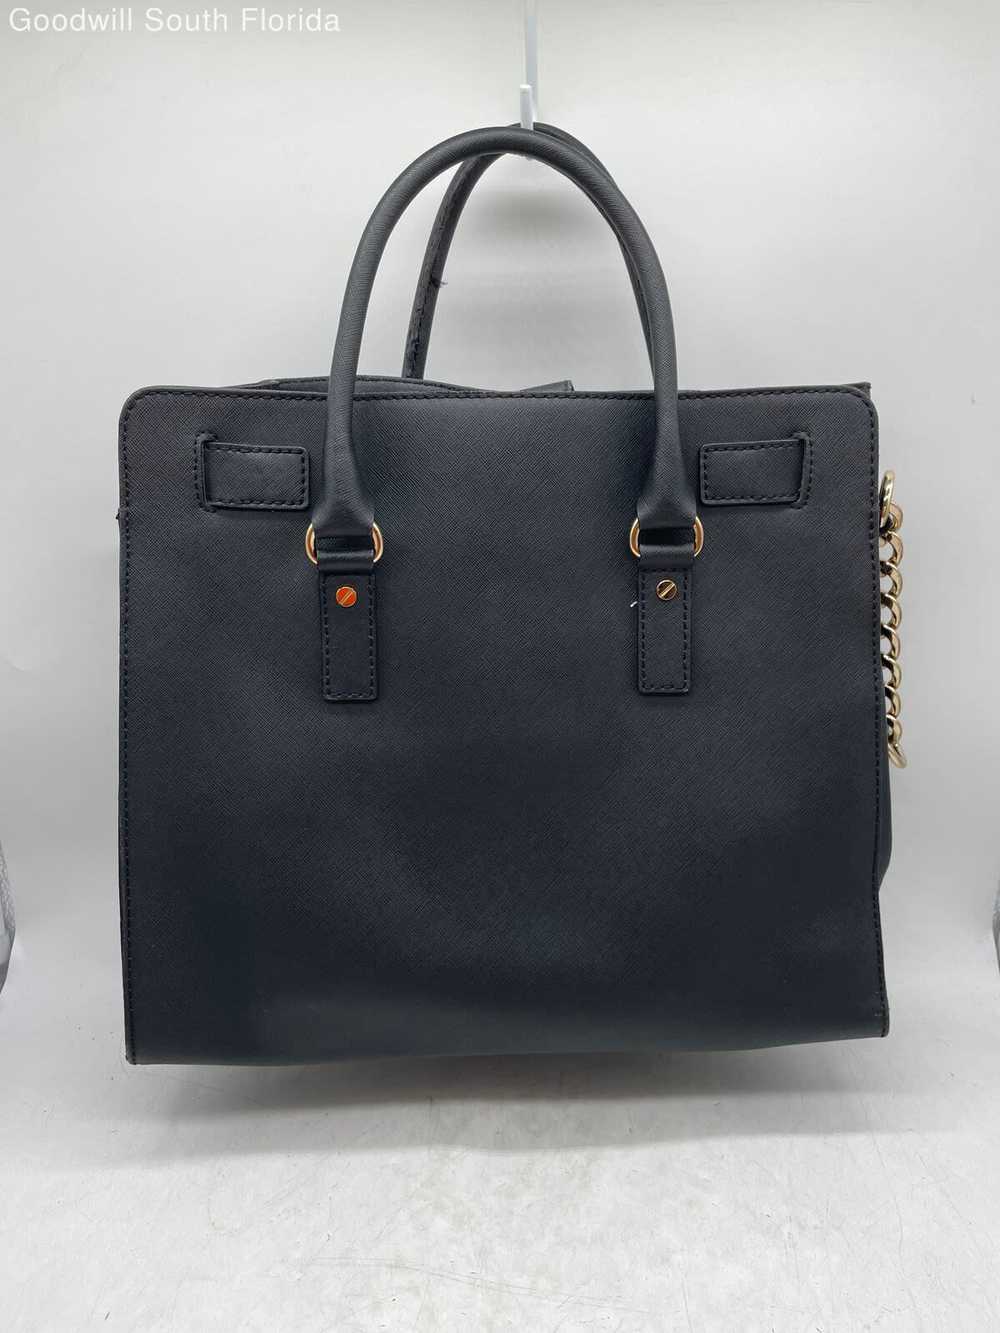 Michael Kors Womens Black Handbag - image 2